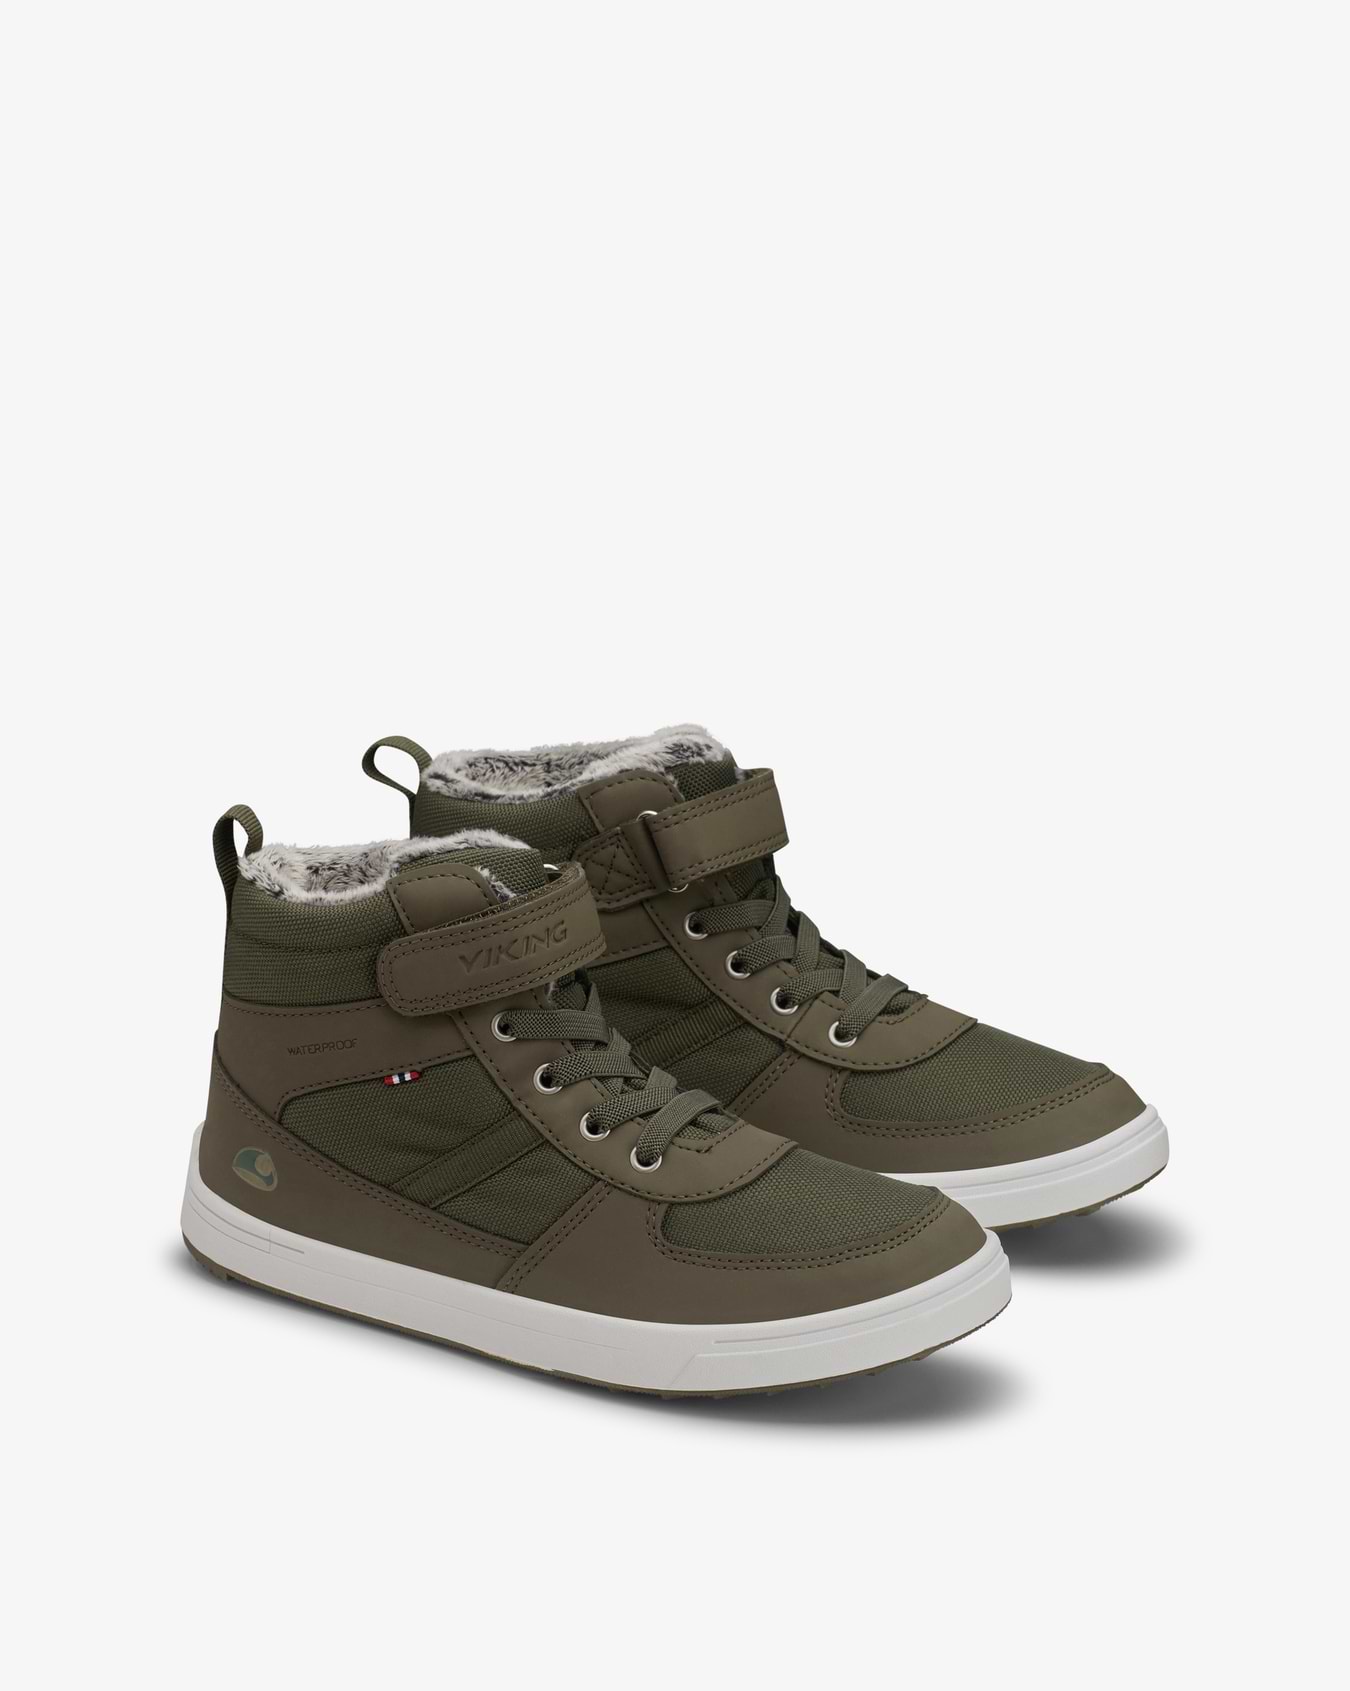 Lucas Mid Jr Khaki/Hunting Green Sneakers